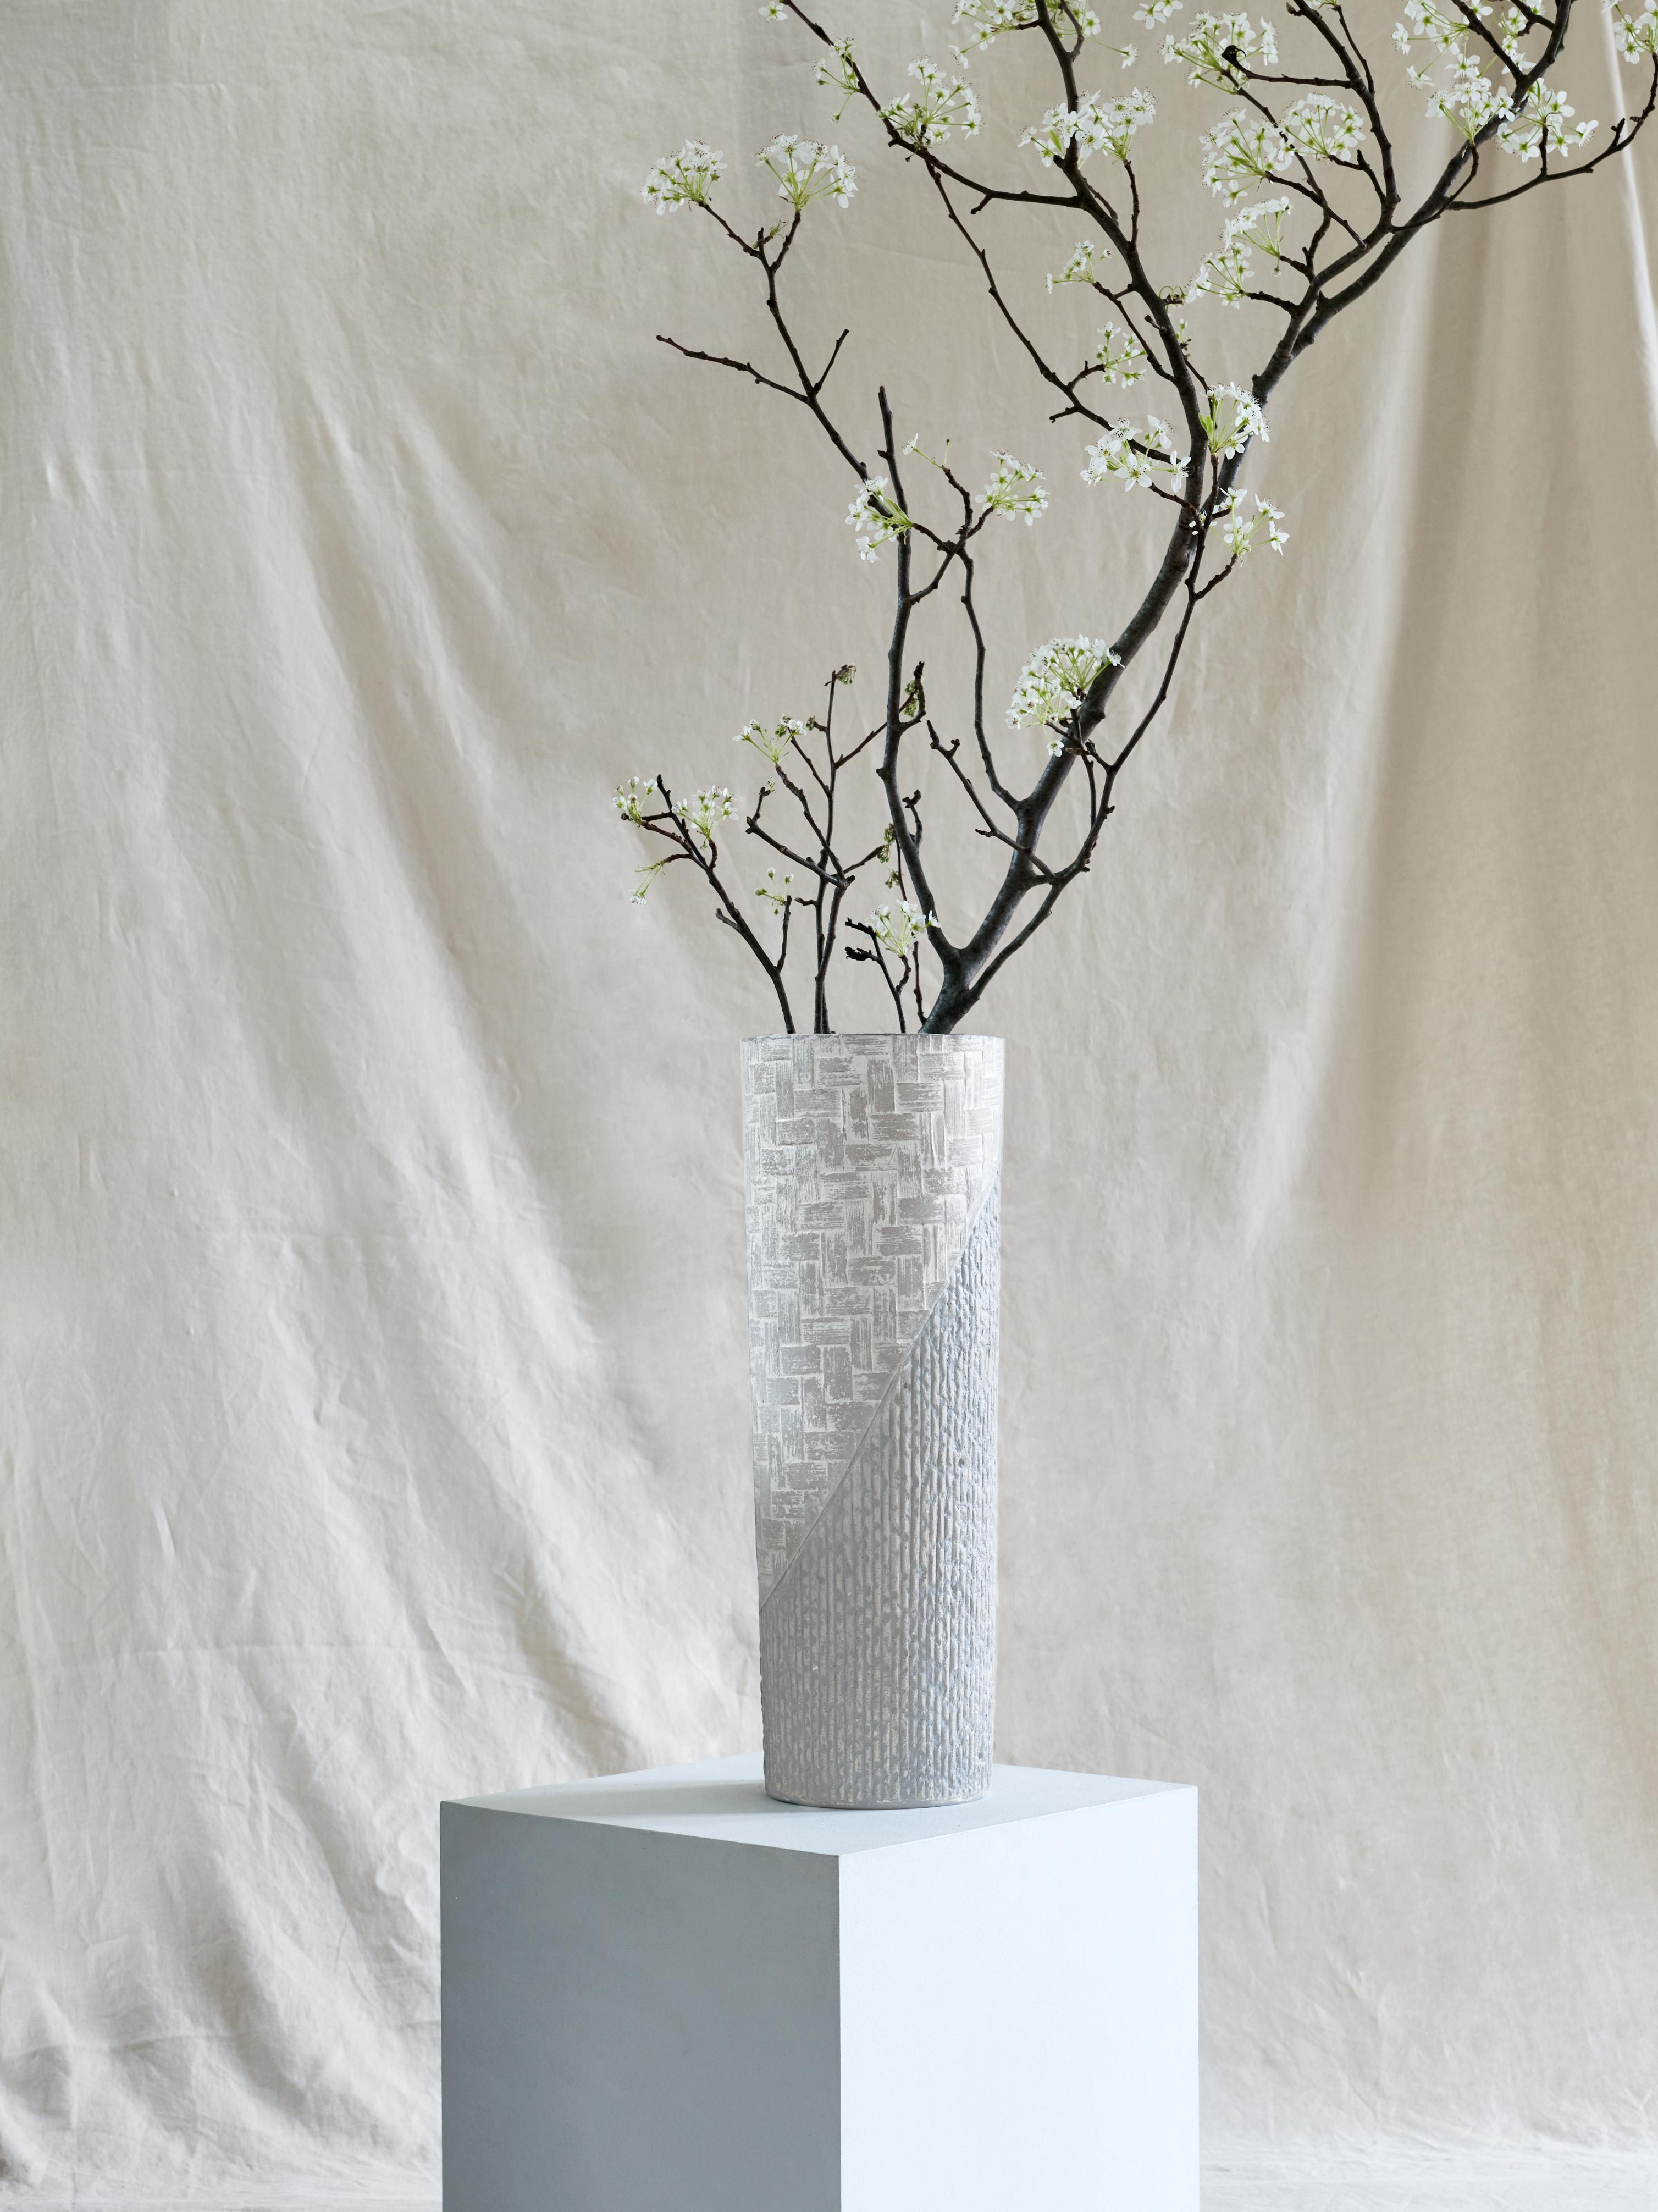 Philippine Medium White & Gray Limestone & Paper Composite Vessel by Studio Laurence For Sale